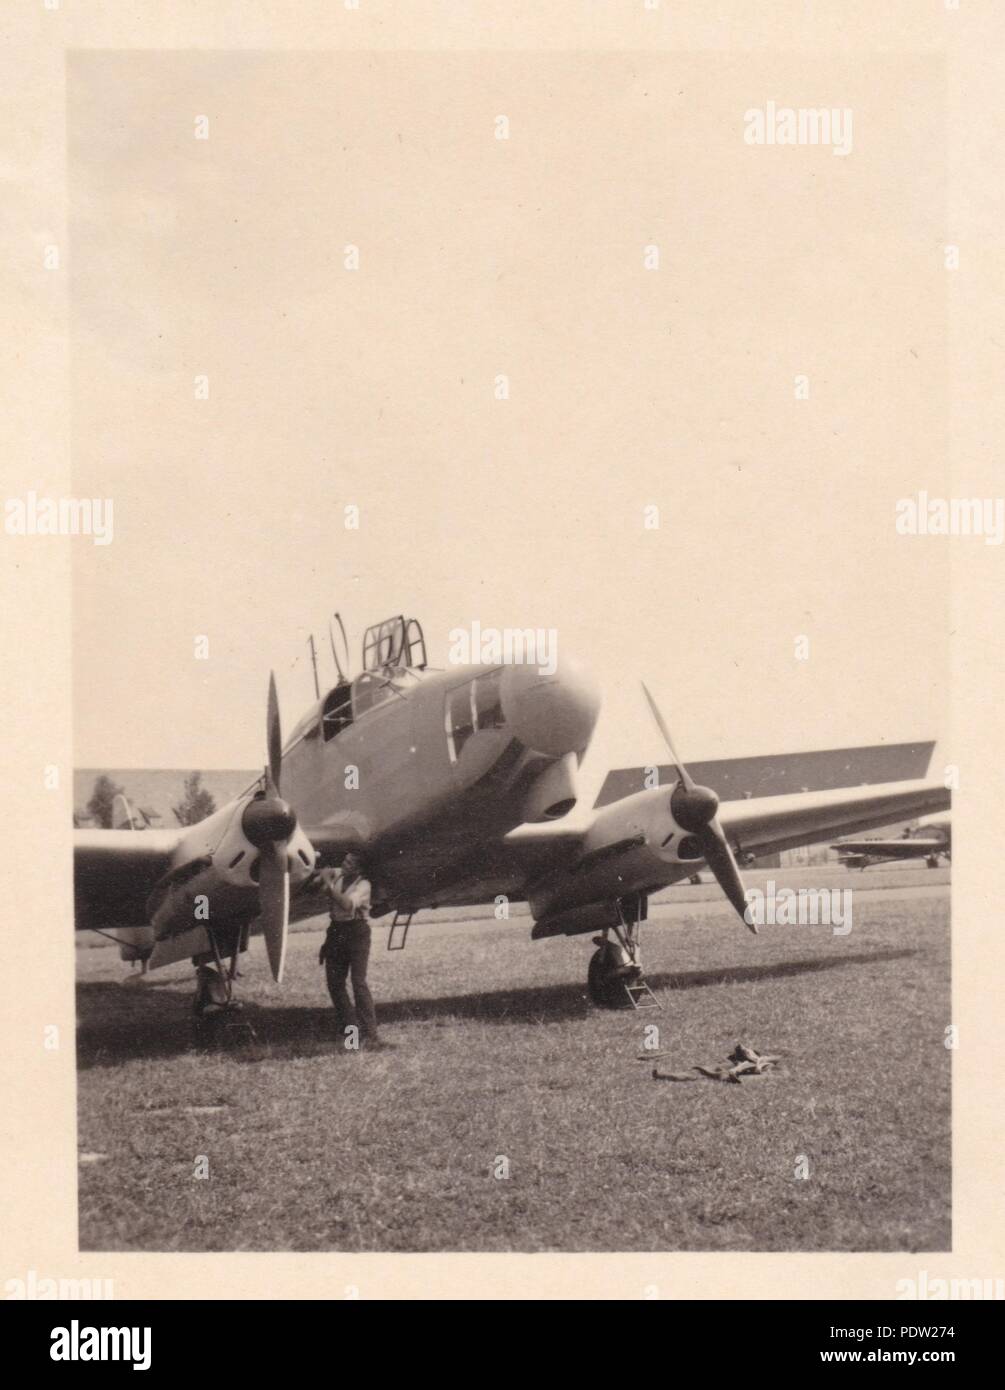 Image from the photo album of Oberfeldwebel Karl Gendner of 1. Staffel, Kampfgeschwader 40: A Luftwaffe Focke Wulf Fw 58 Weihe (Harrier), twin-engine, multi-role aircraft, undergoes checks on a German airfield. Stock Photo